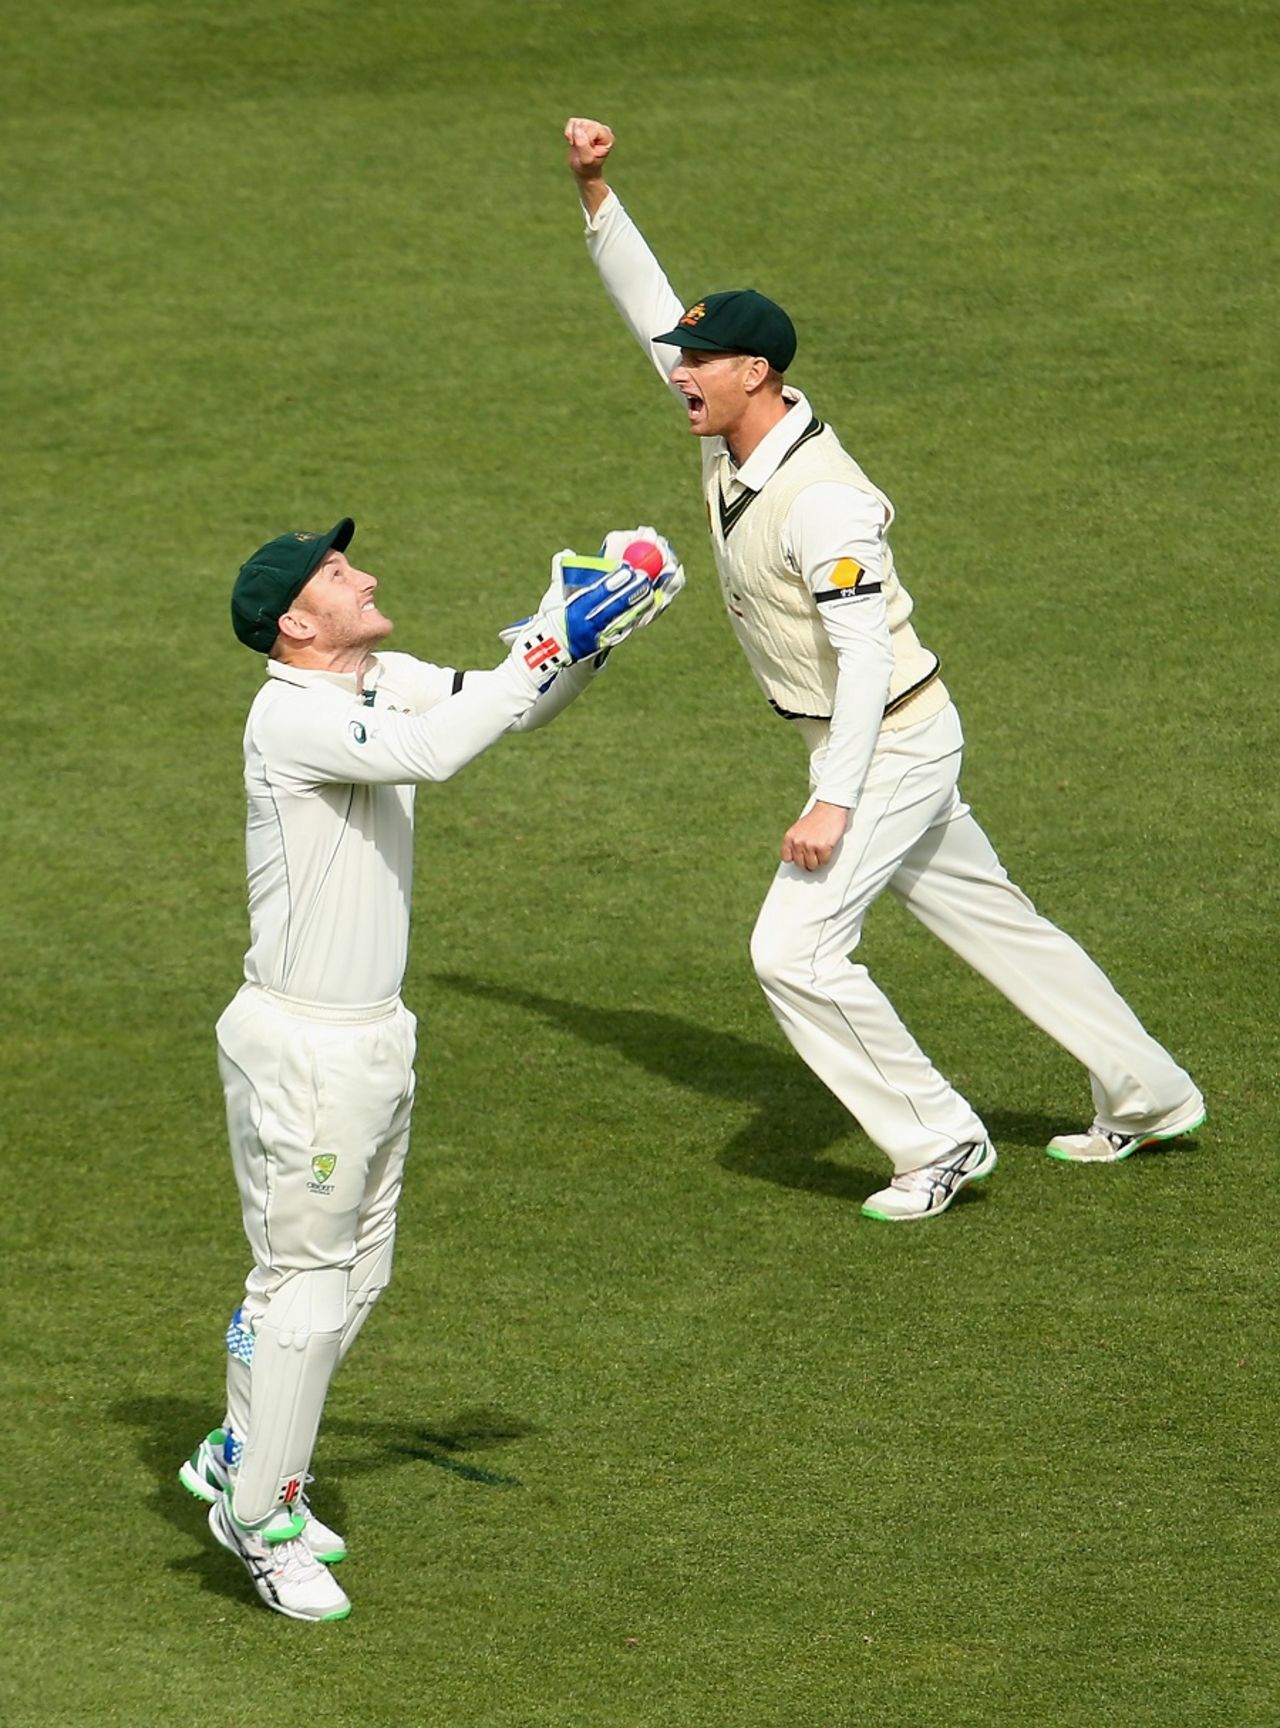 Peter Nevill took a very sharp catch to dismiss Tom Latham, Australia v New Zealand, 3rd Test, Adelaide, November 27, 2015